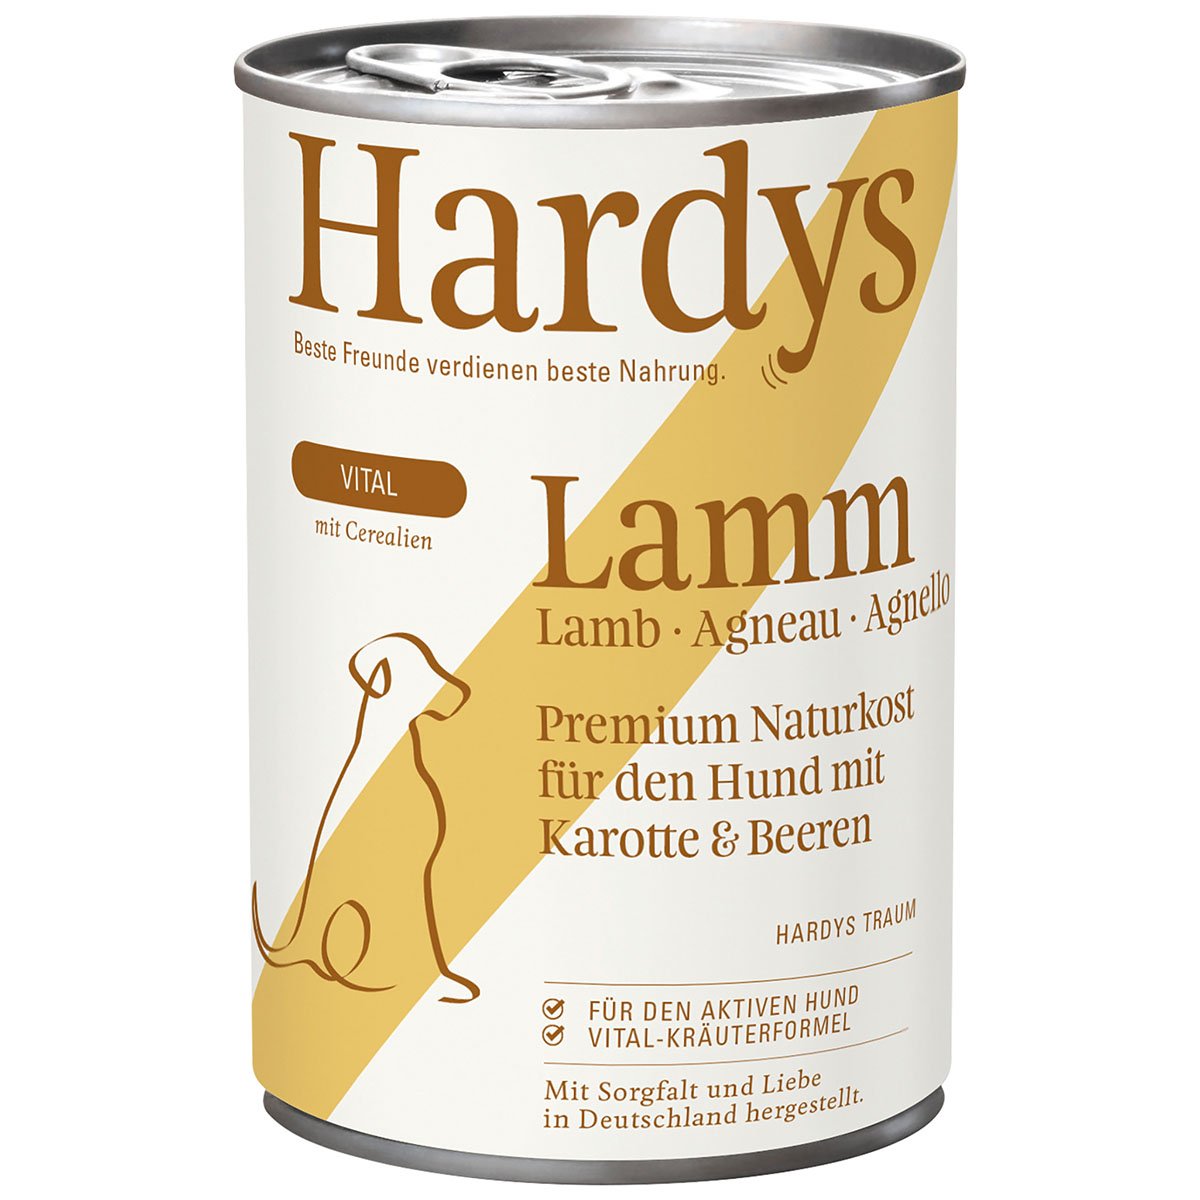 Hardys VITAL Lamm mit Karotte & Beeren 12x400g